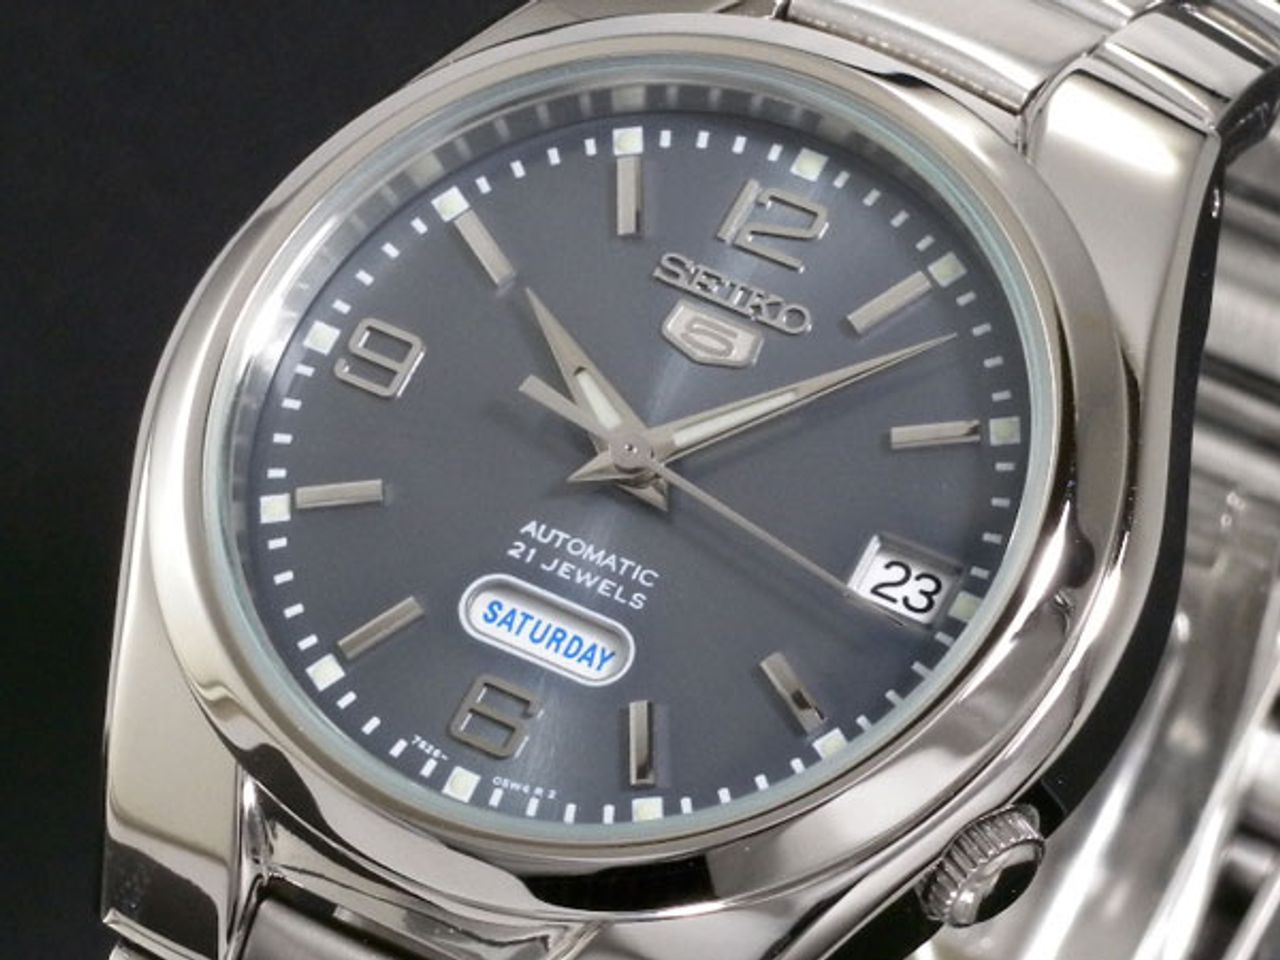 Đồng hồ Seiko nam SNK621 máy Automatic 1